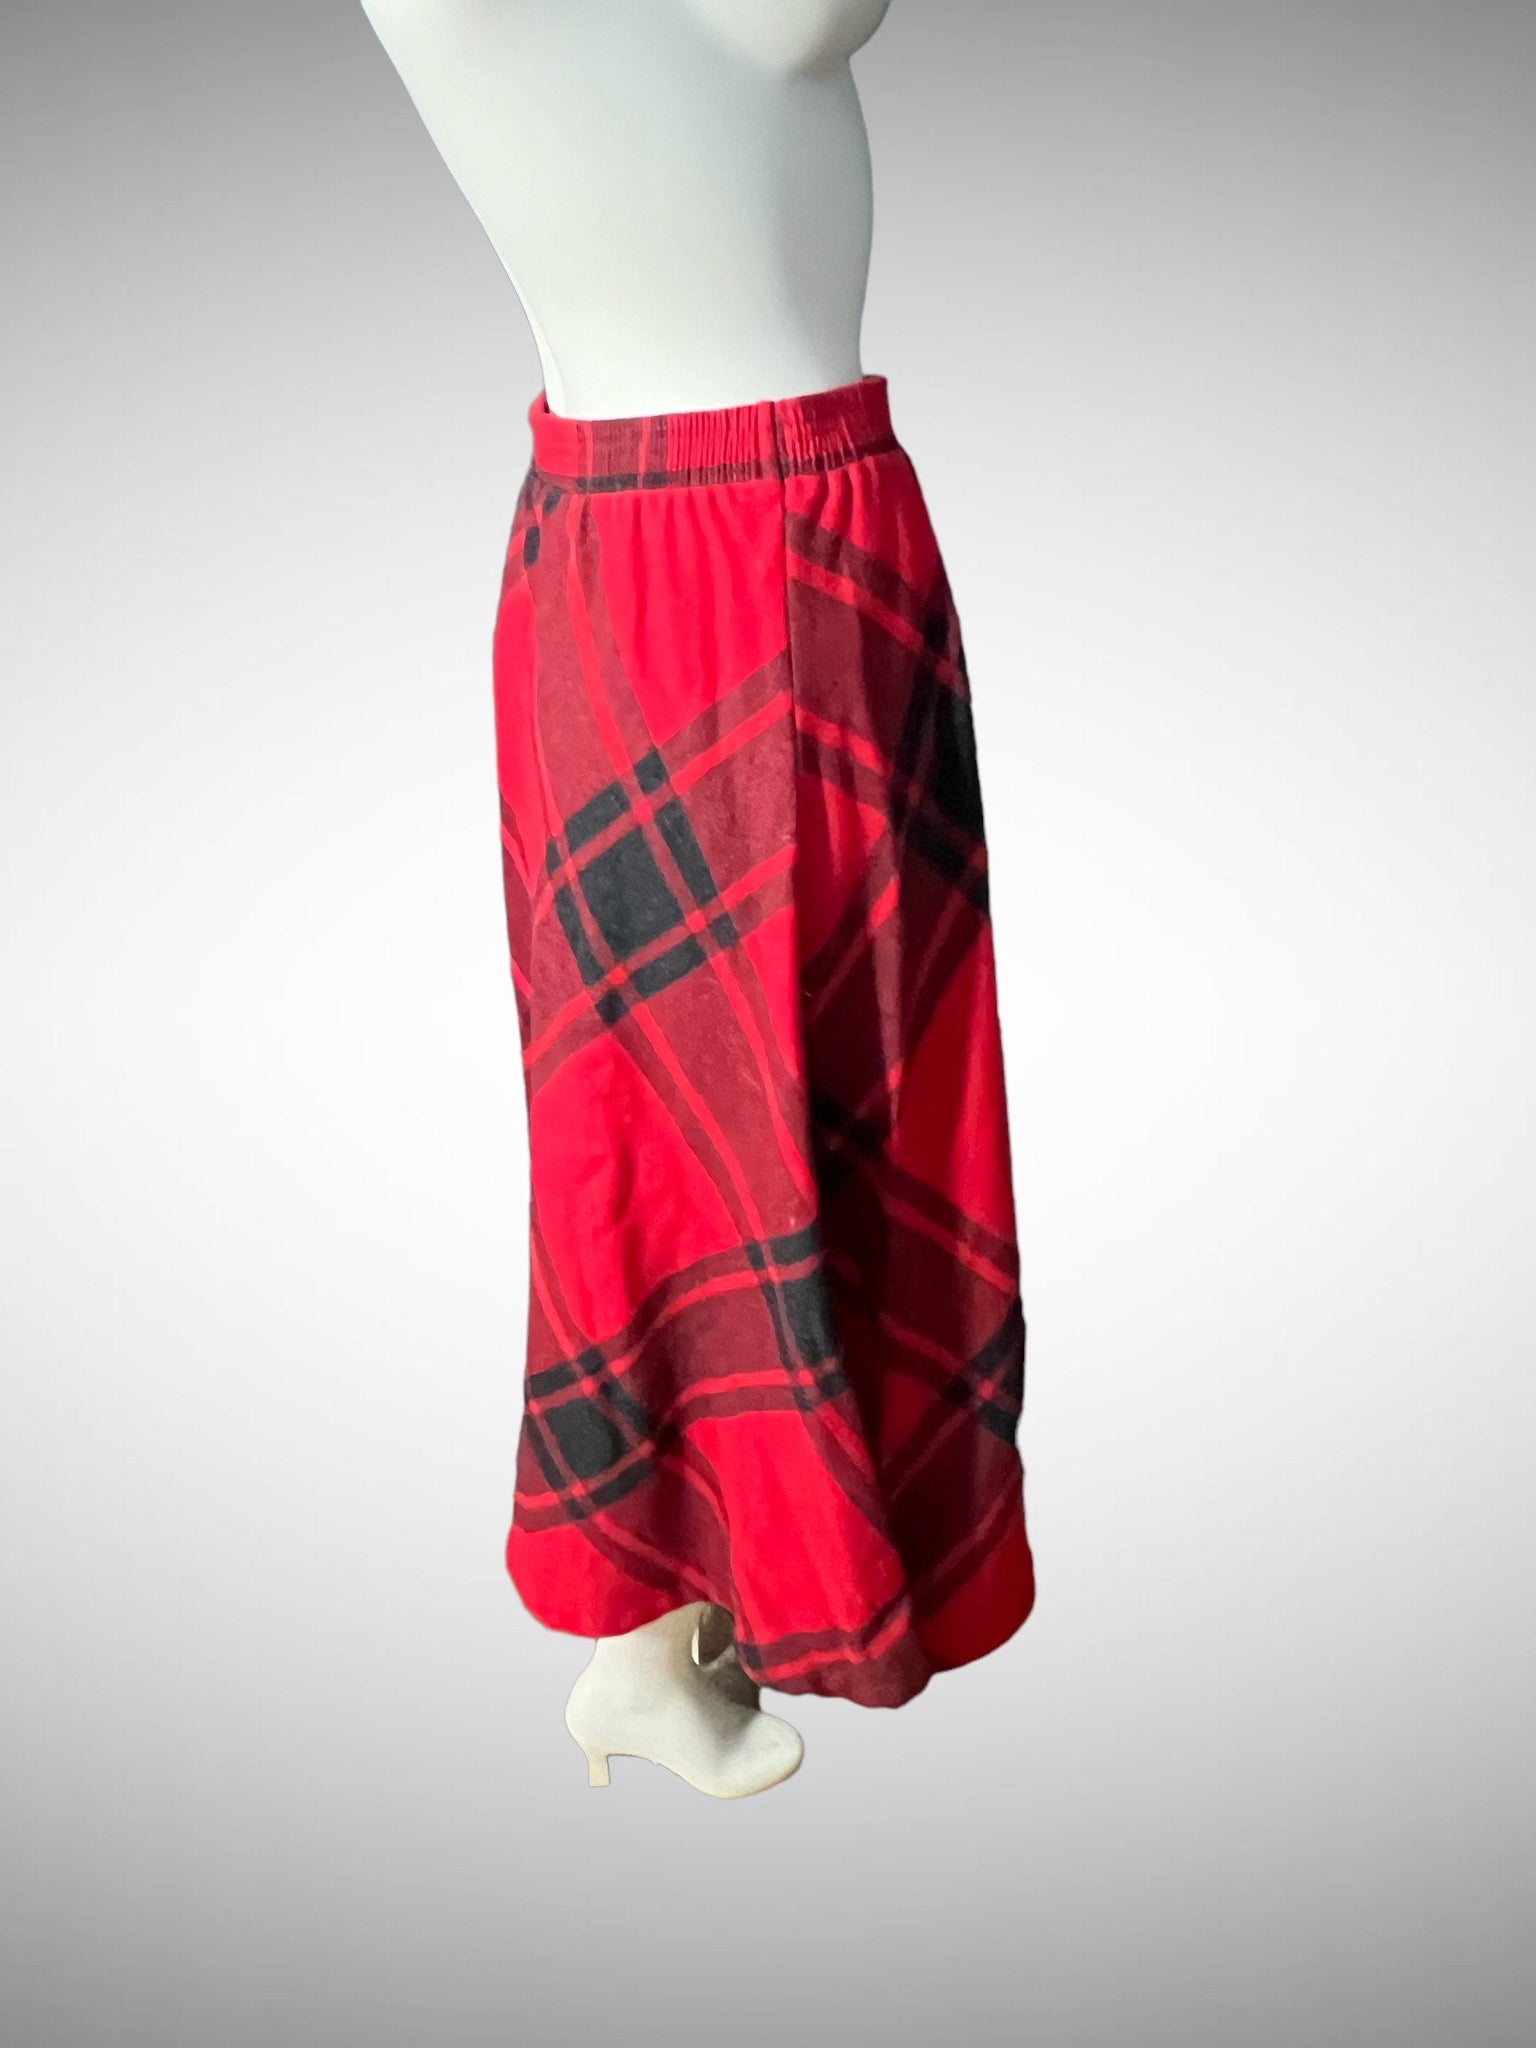 Vintage 80's red plaid full circle skirt M